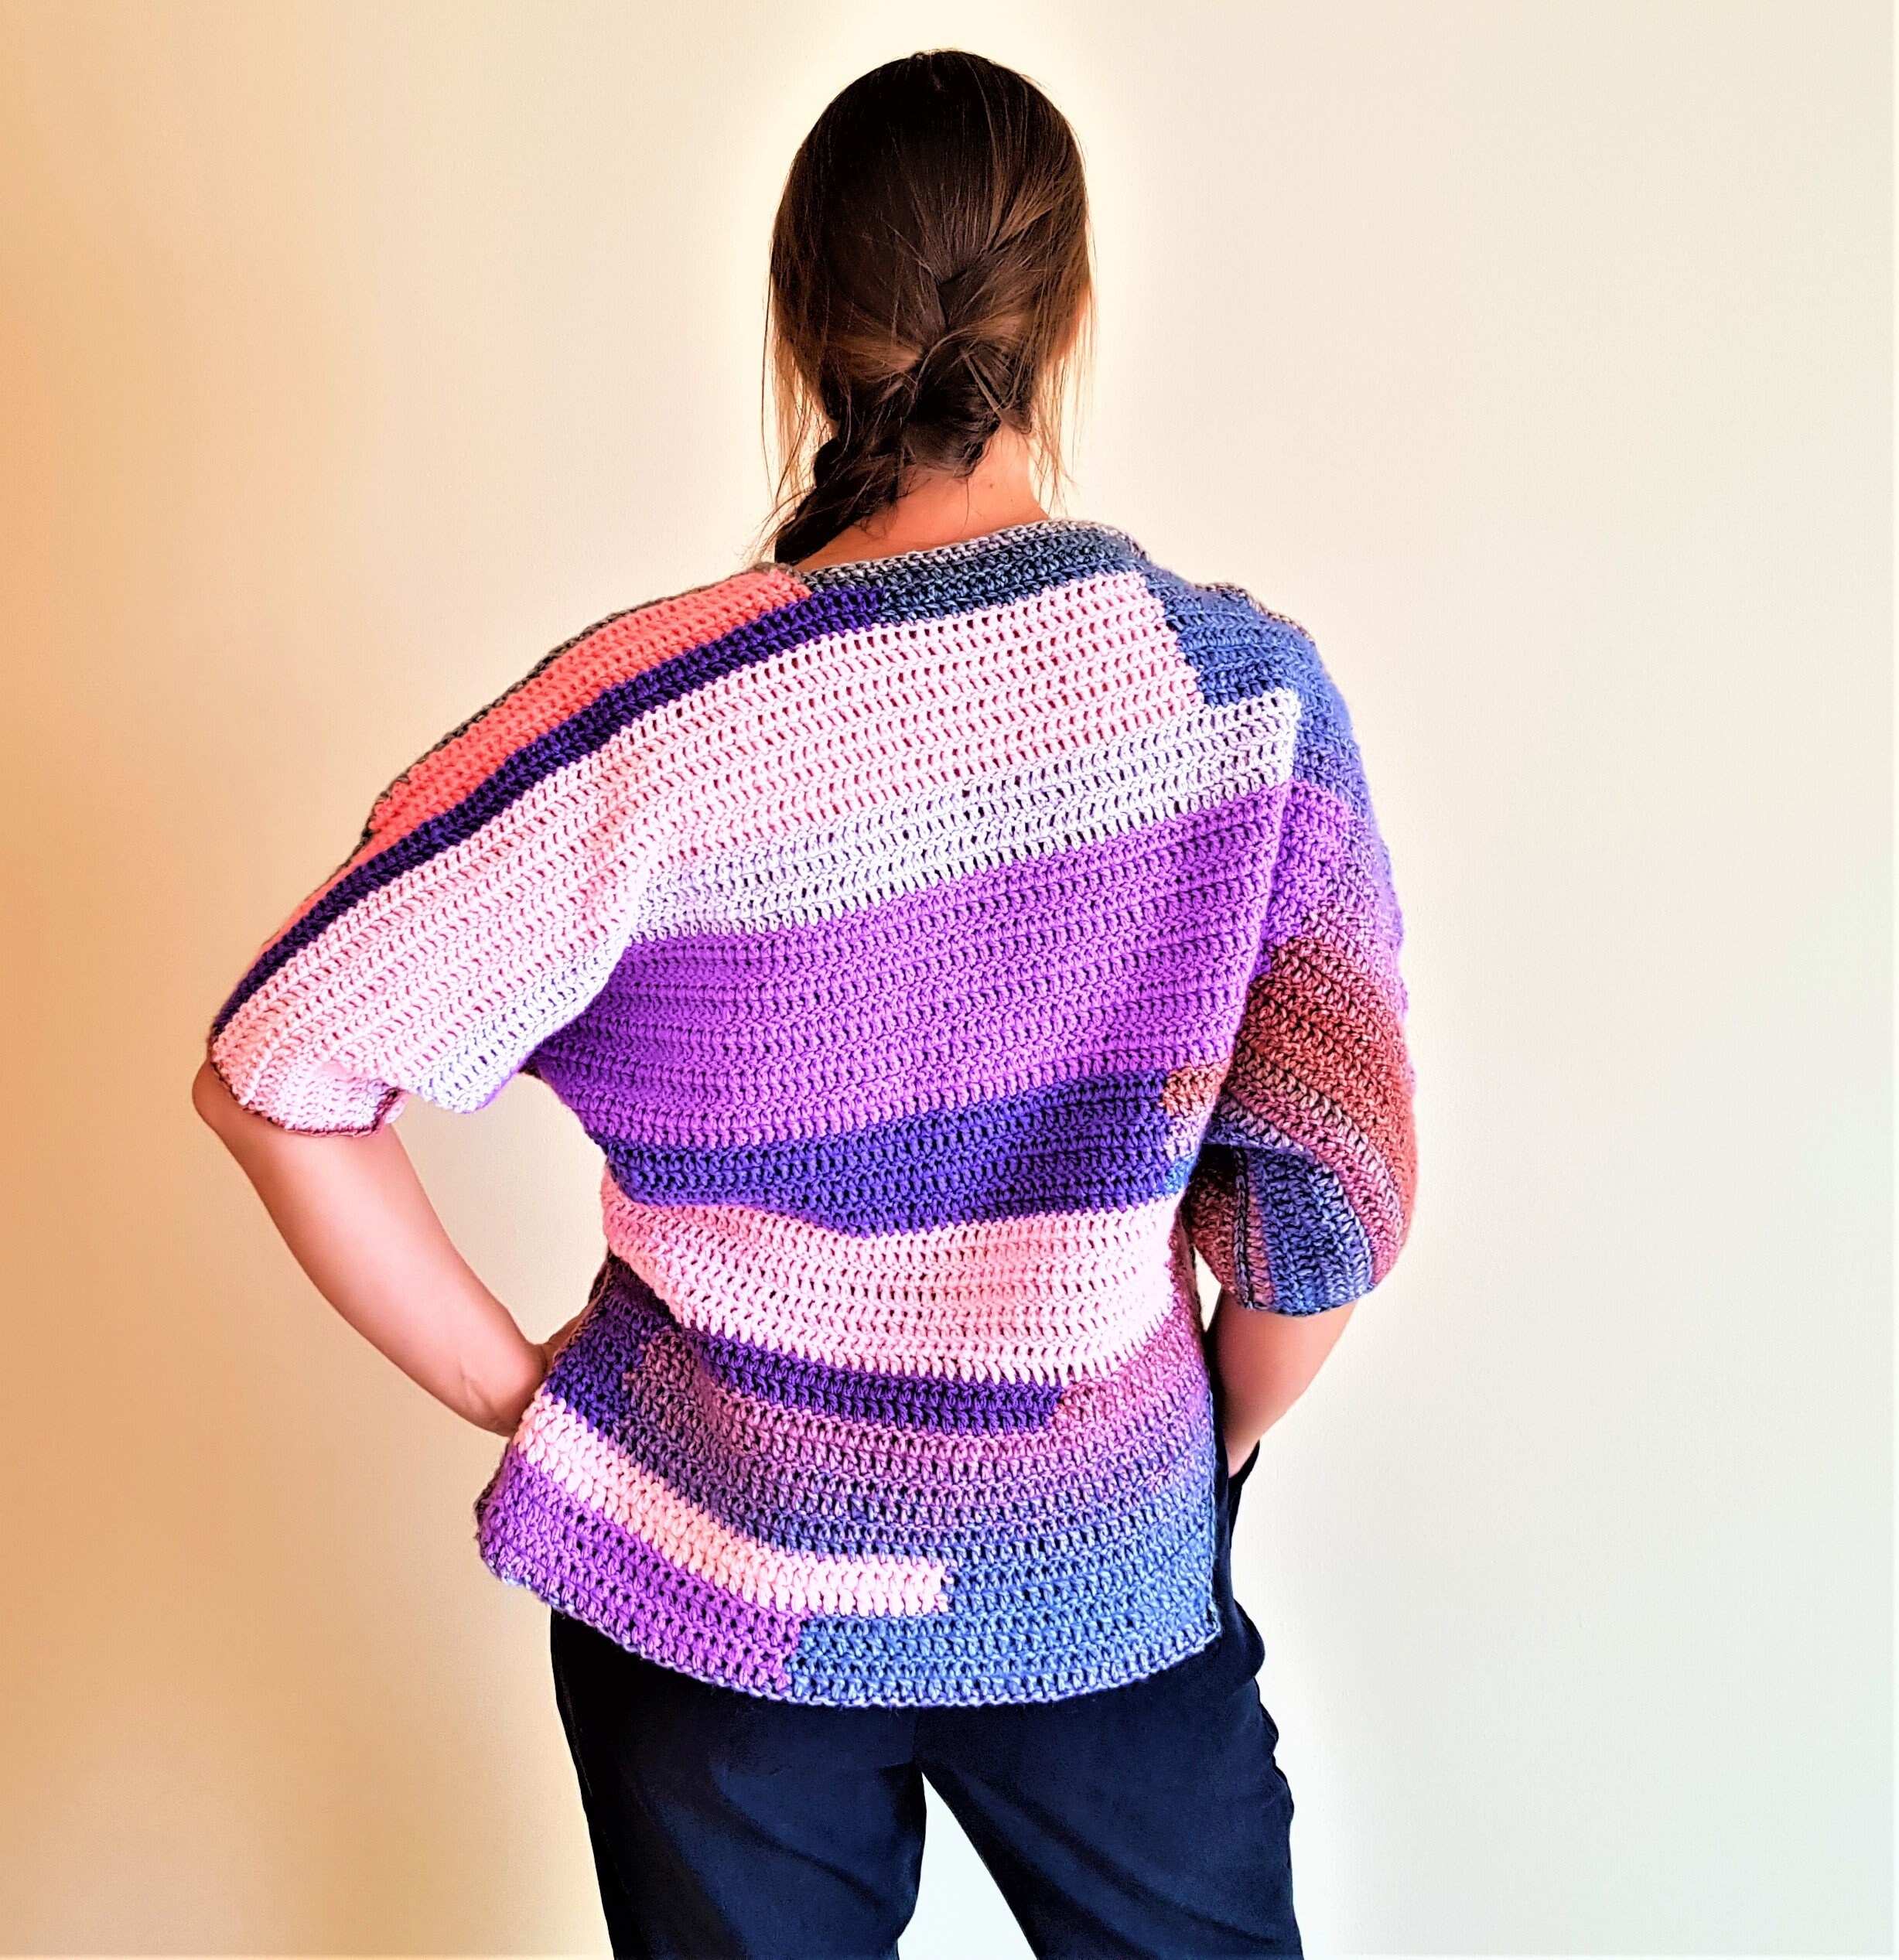 Striped women's warm tunic. Fashionable crocheted | Etsy